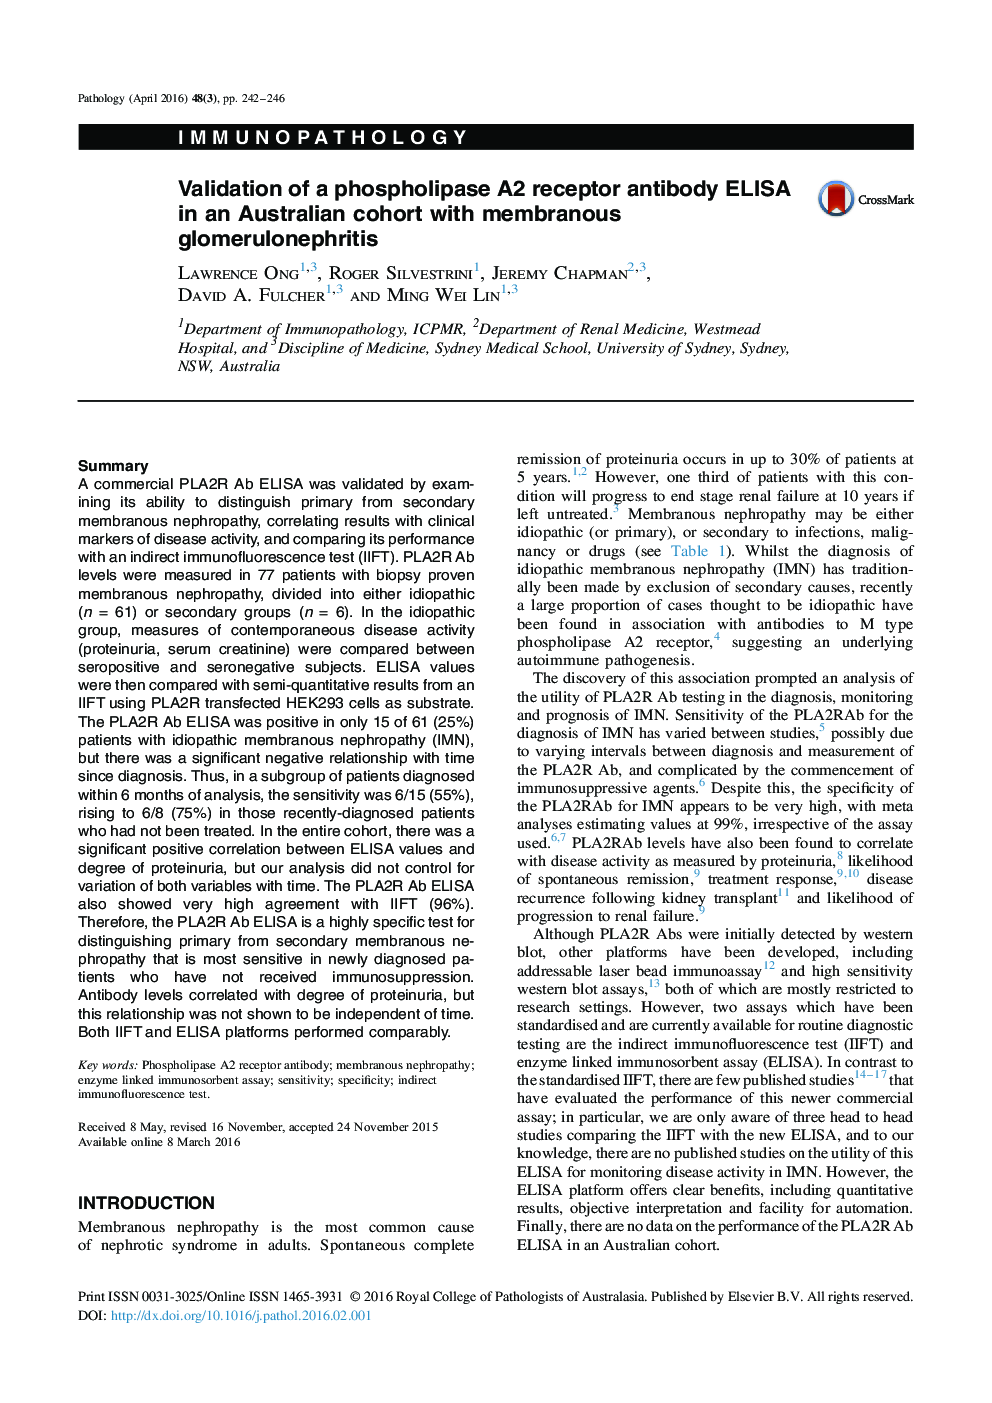 Validation of a phospholipase A2 receptor antibody ELISA in an Australian cohort with membranous glomerulonephritis